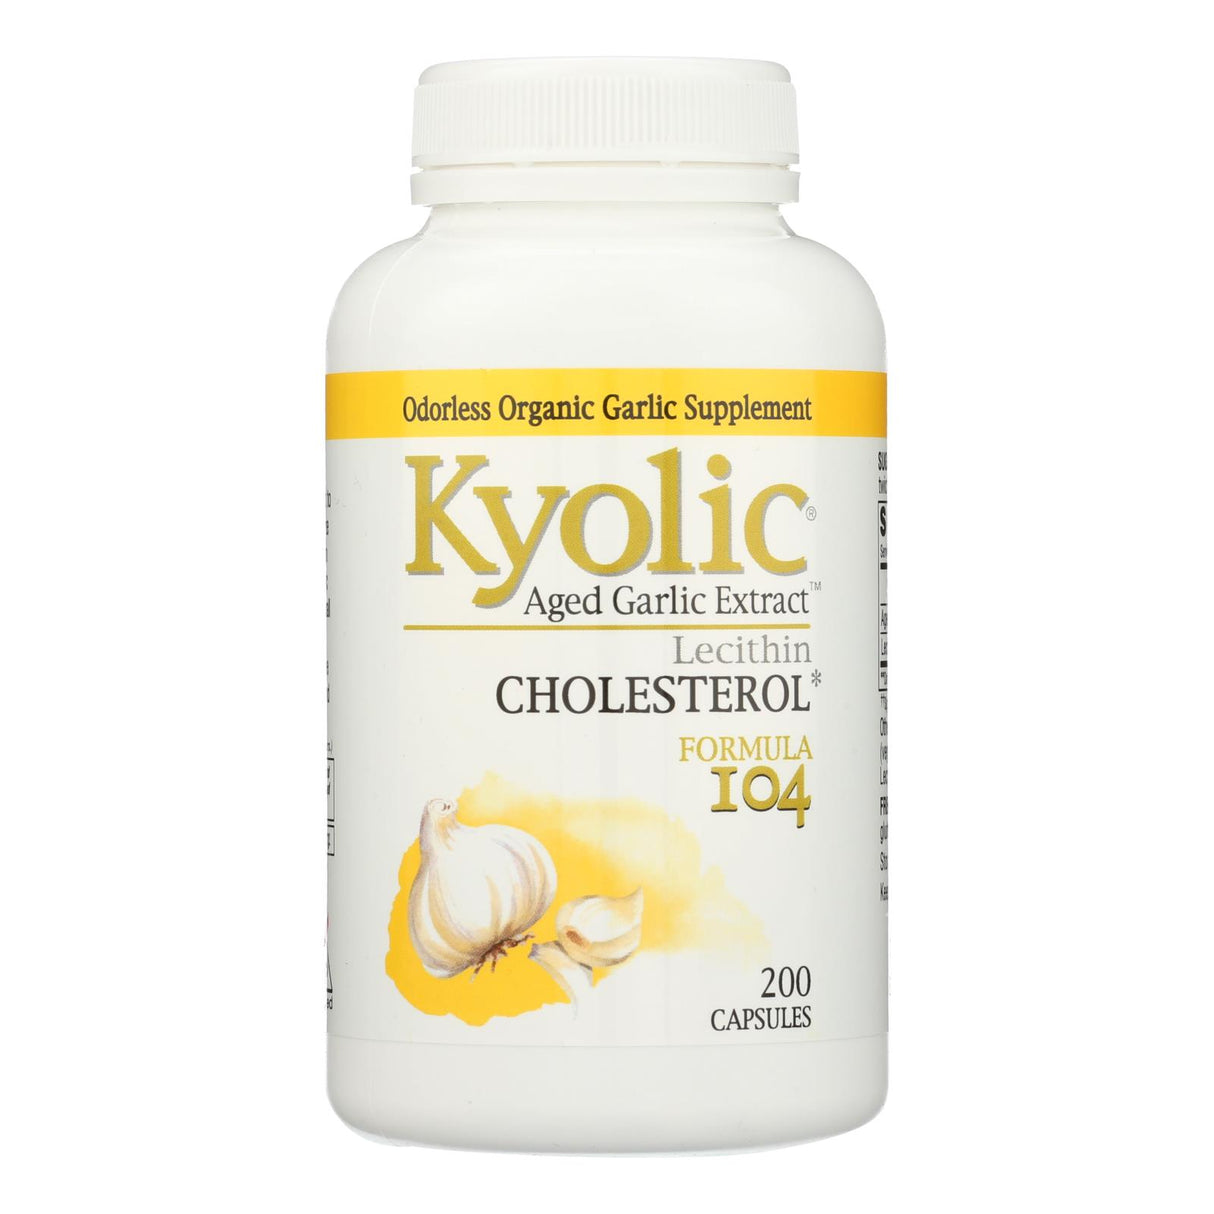 Kyolic Aged Garlic Extract Cholesterol Formula 104, 200 Capsules - Cozy Farm 